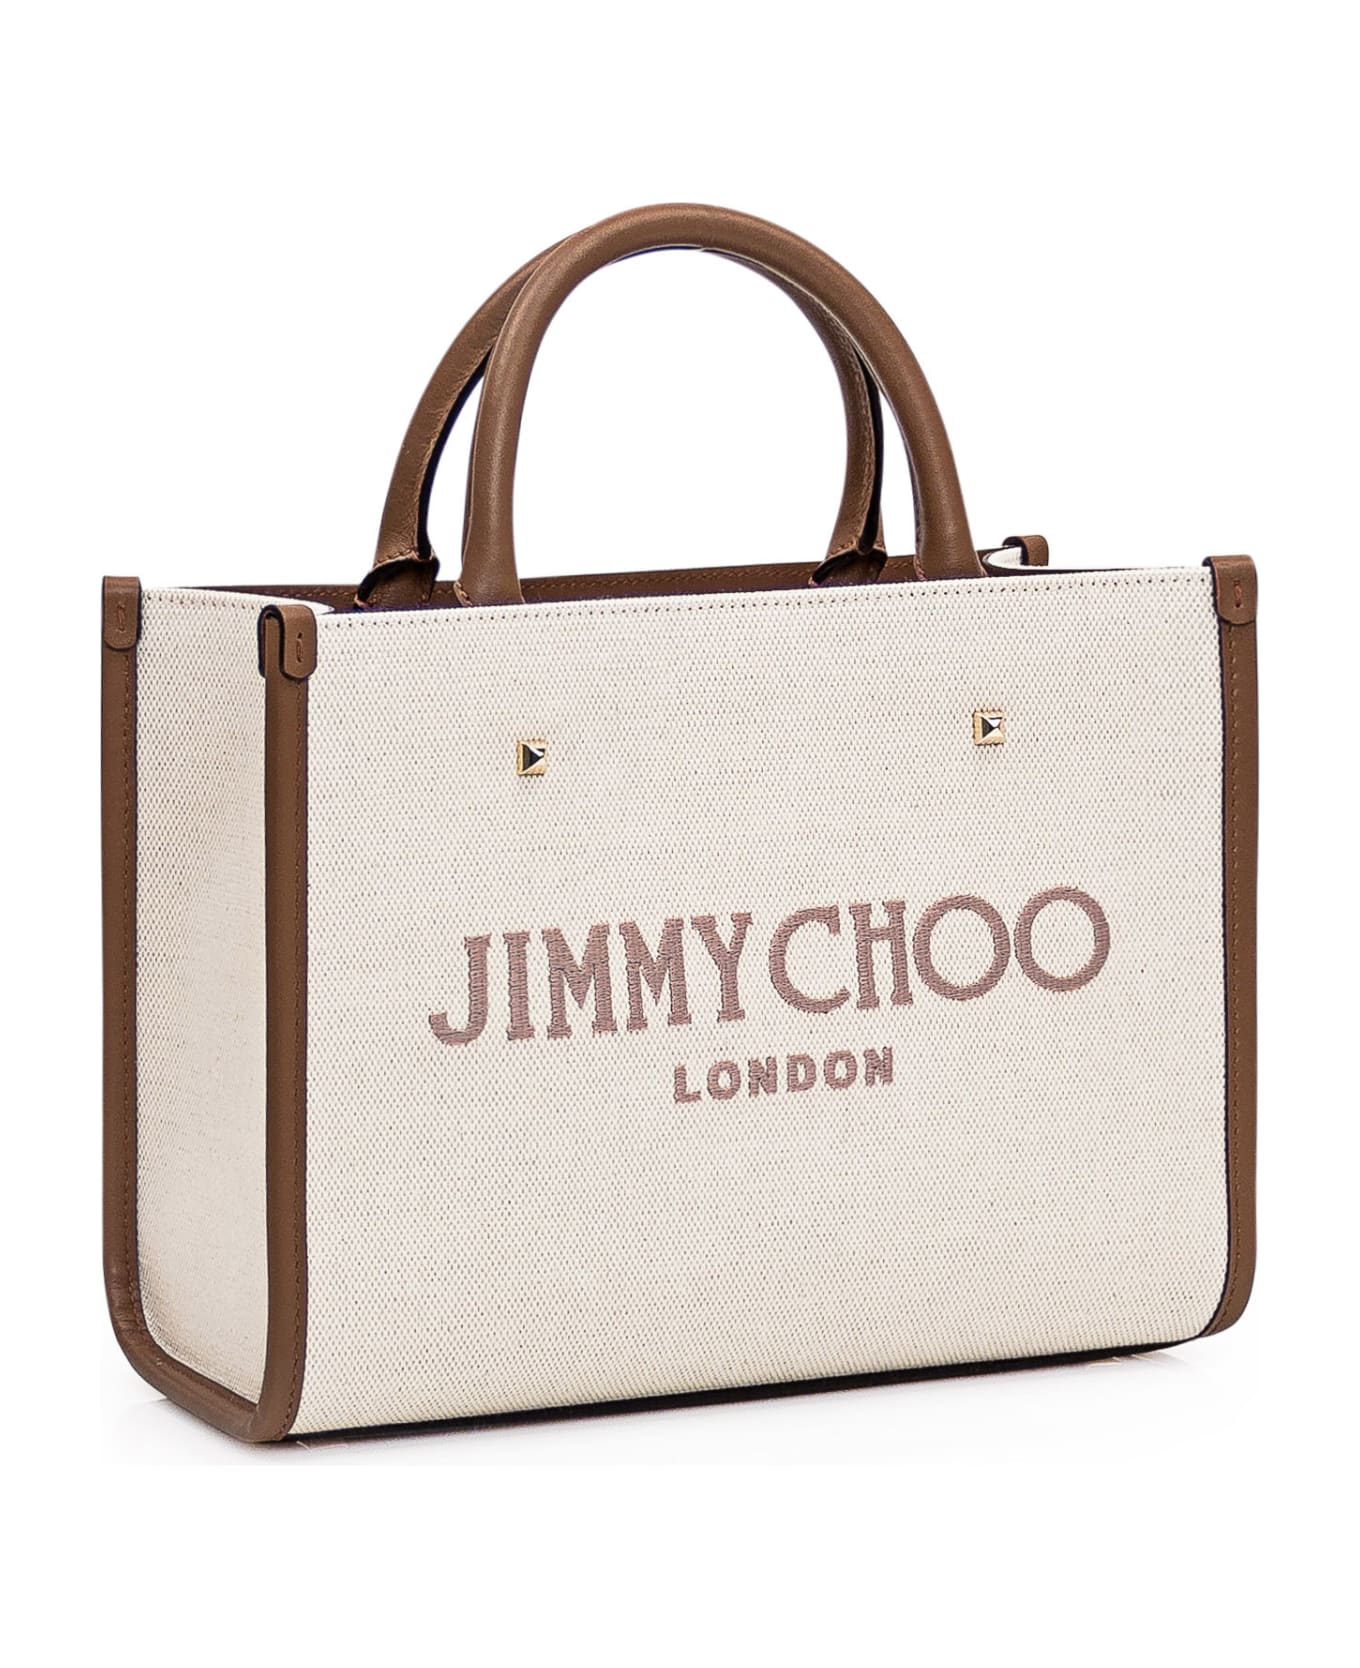 Jimmy Choo Tote Avenue S Bag - NATURAL/TAUPE/DARK TAN/LIGHT G トートバッグ